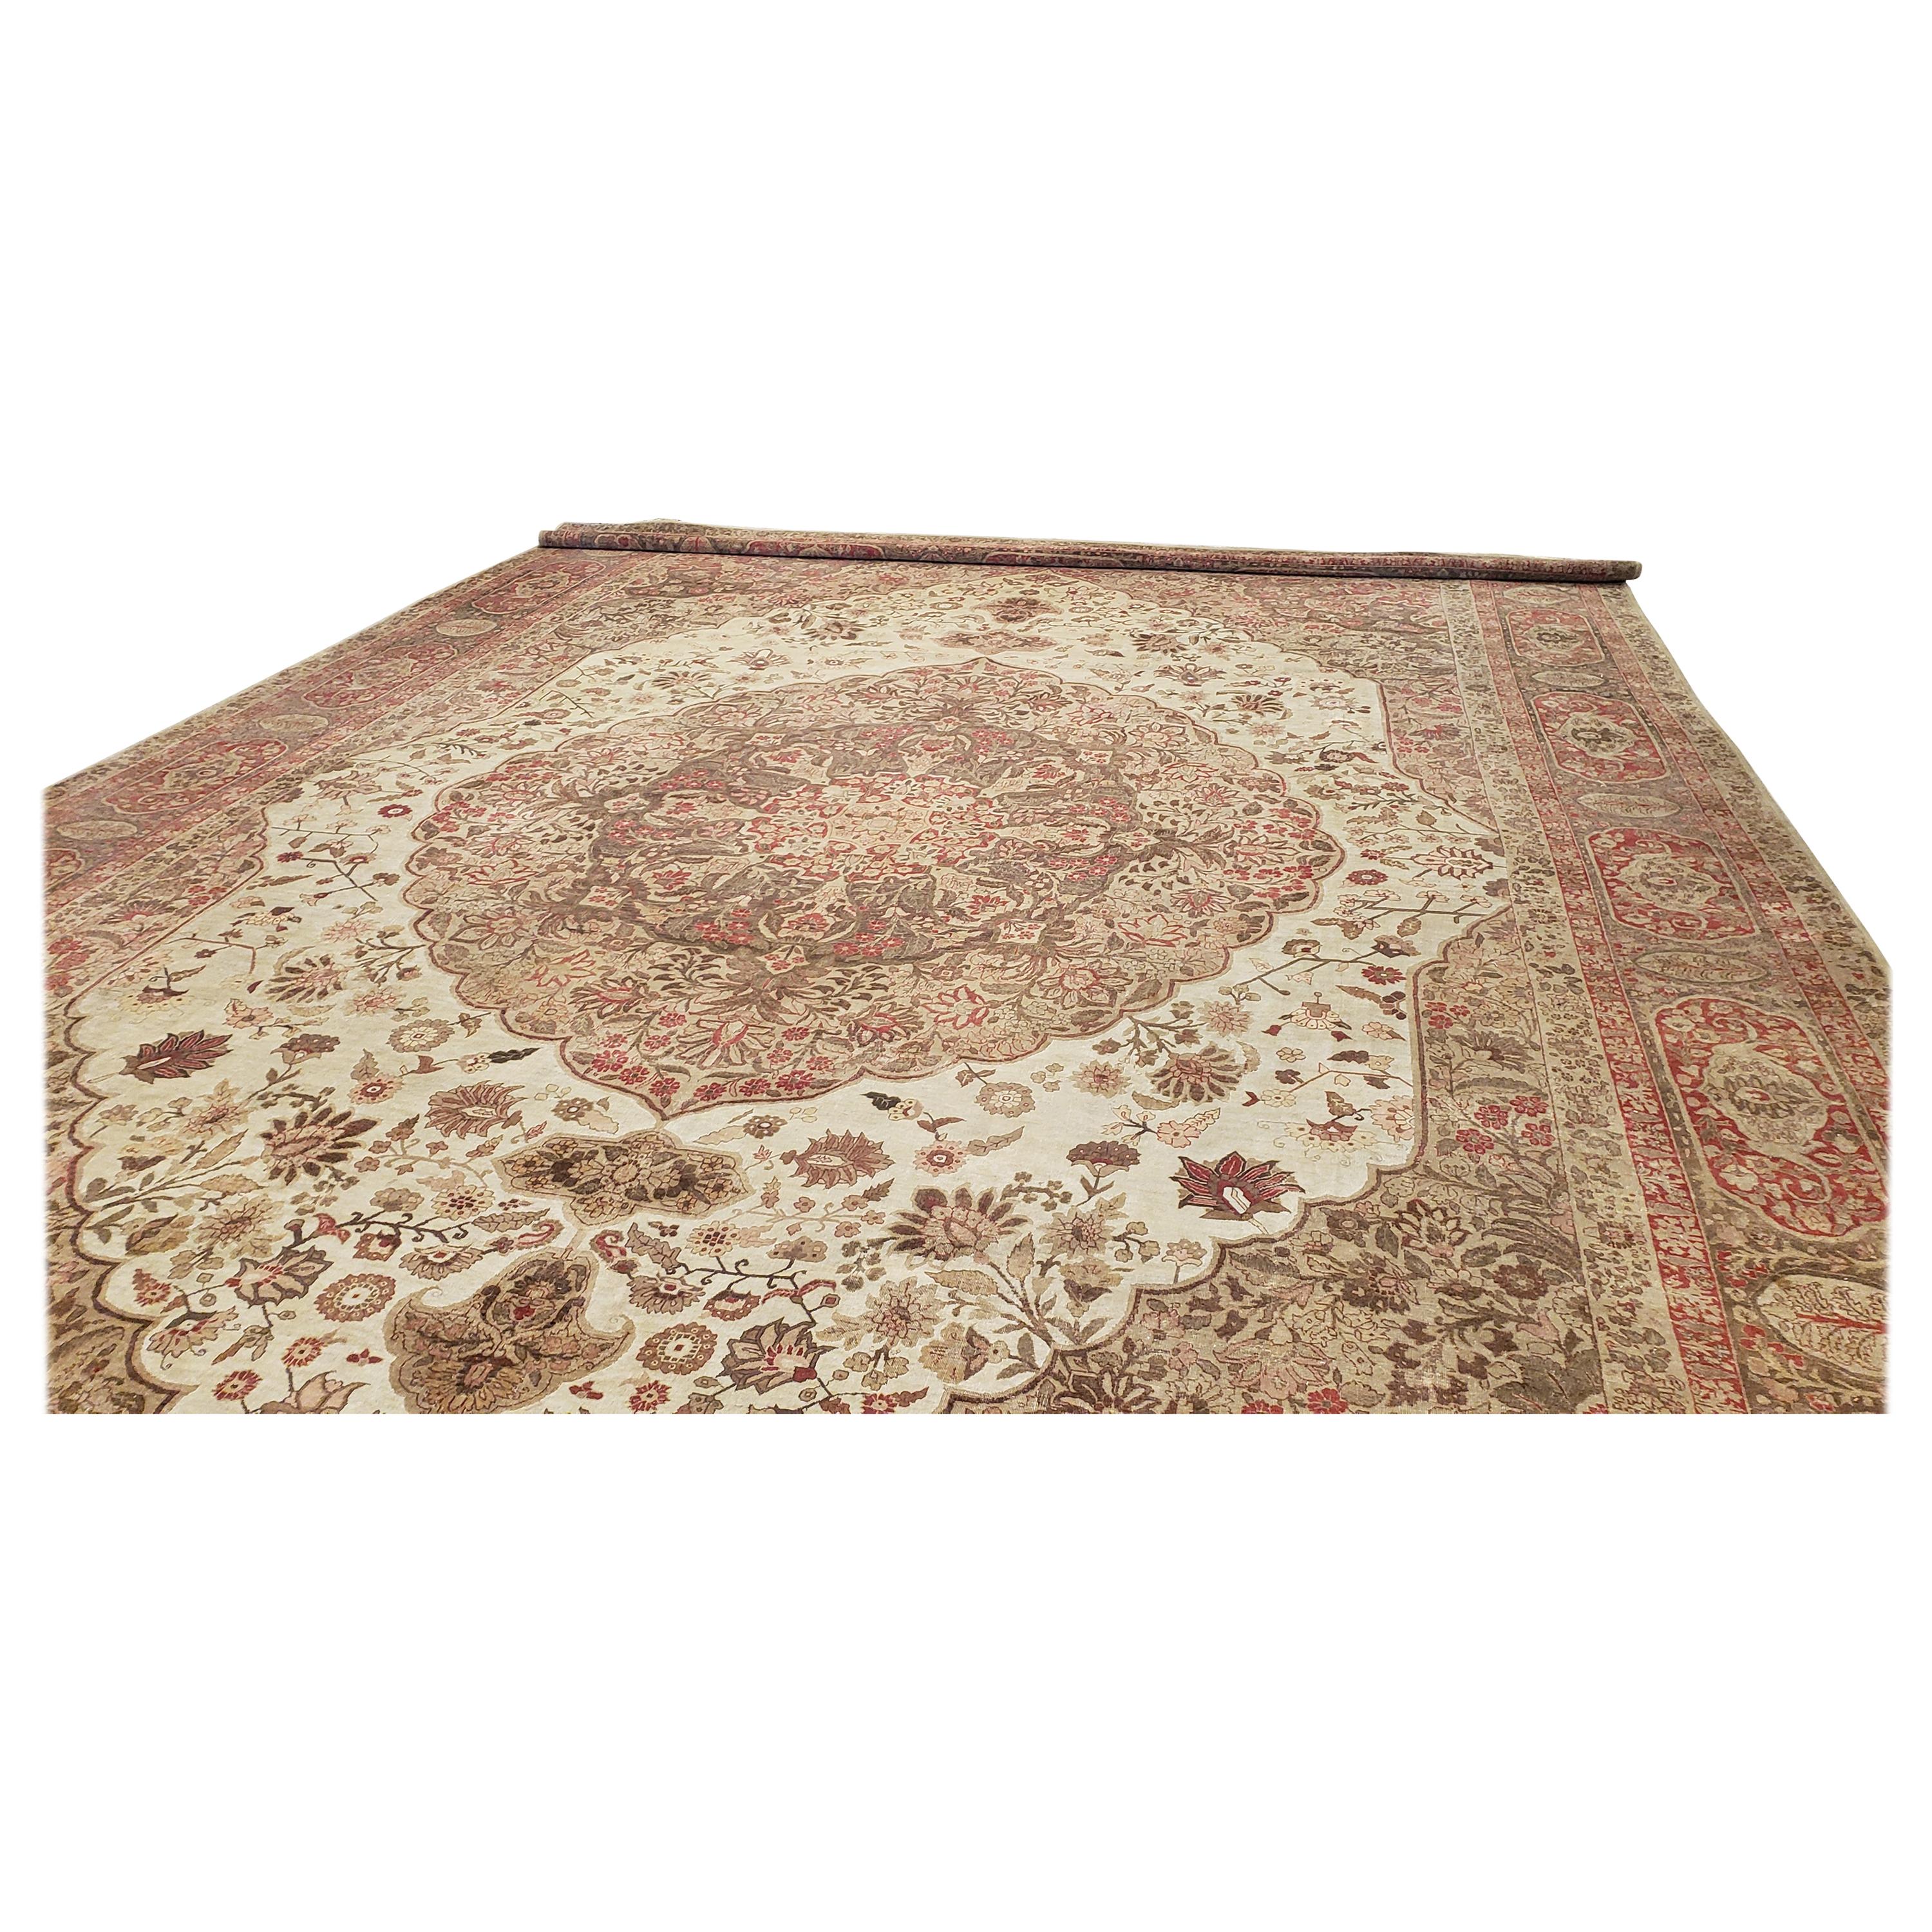 Antique Tabriz Carpet, Hadji Jalili Persian Rug, Earth Tones, Light Blue, Coral For Sale